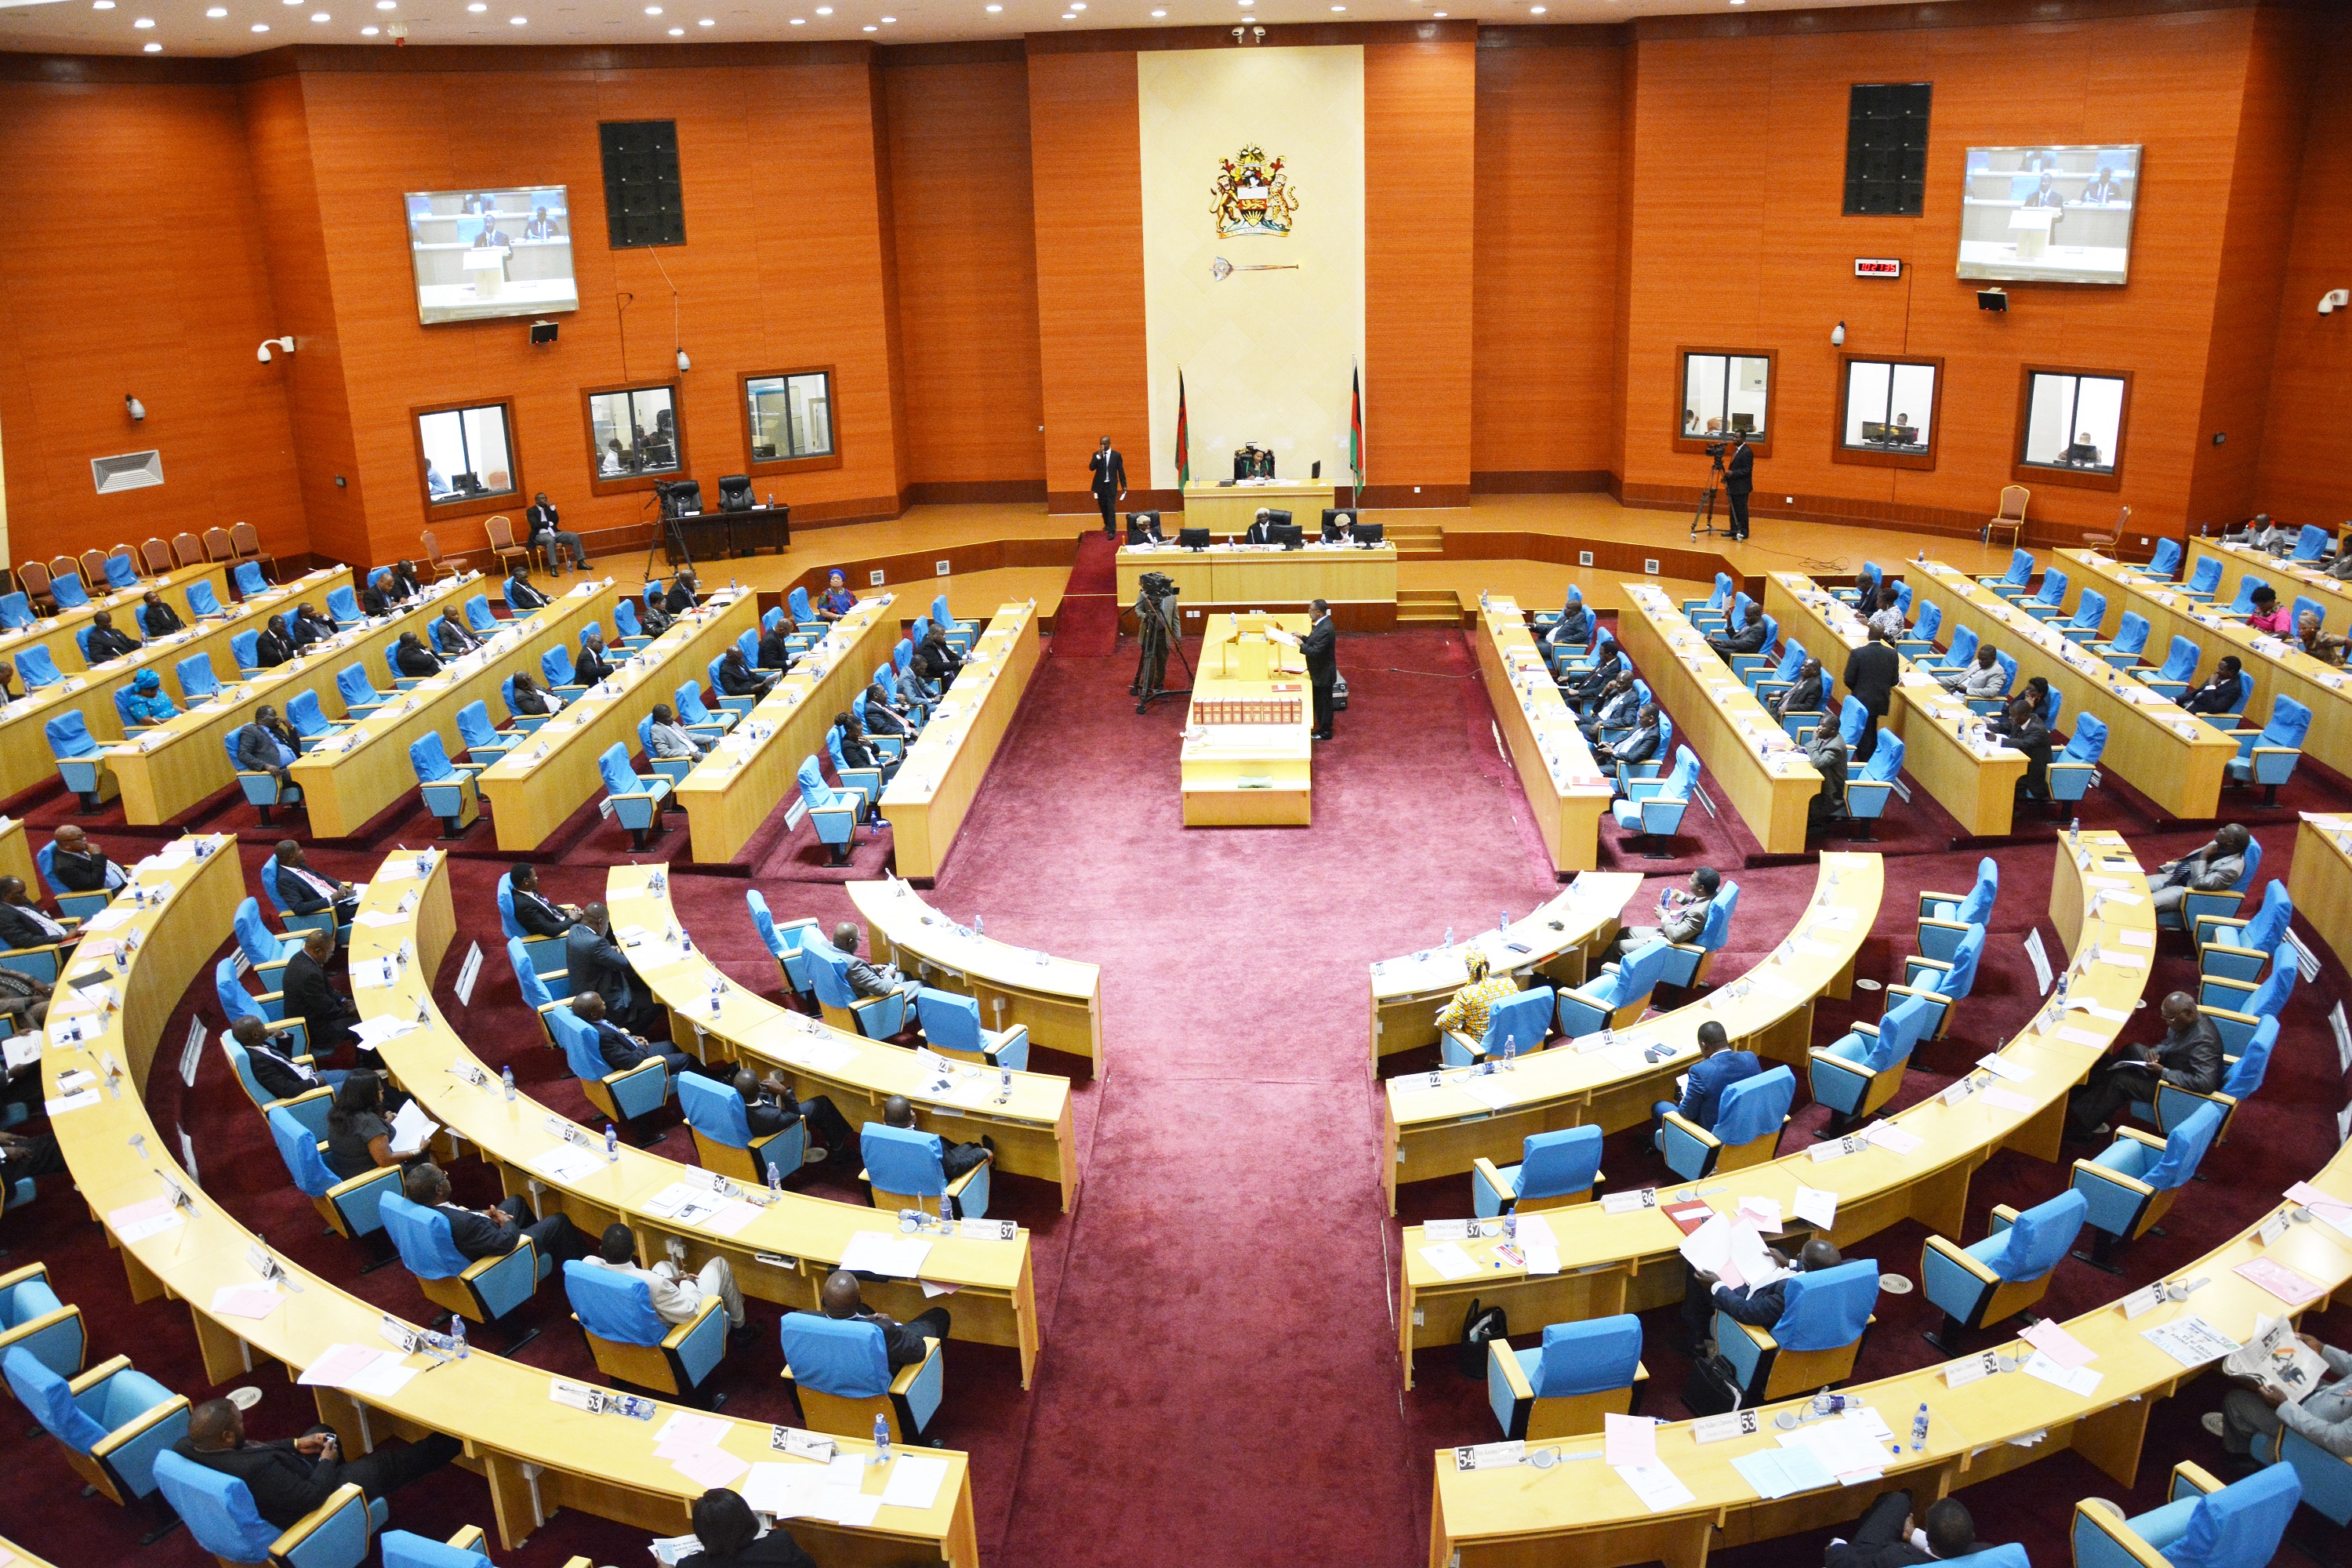 malawi's parliament